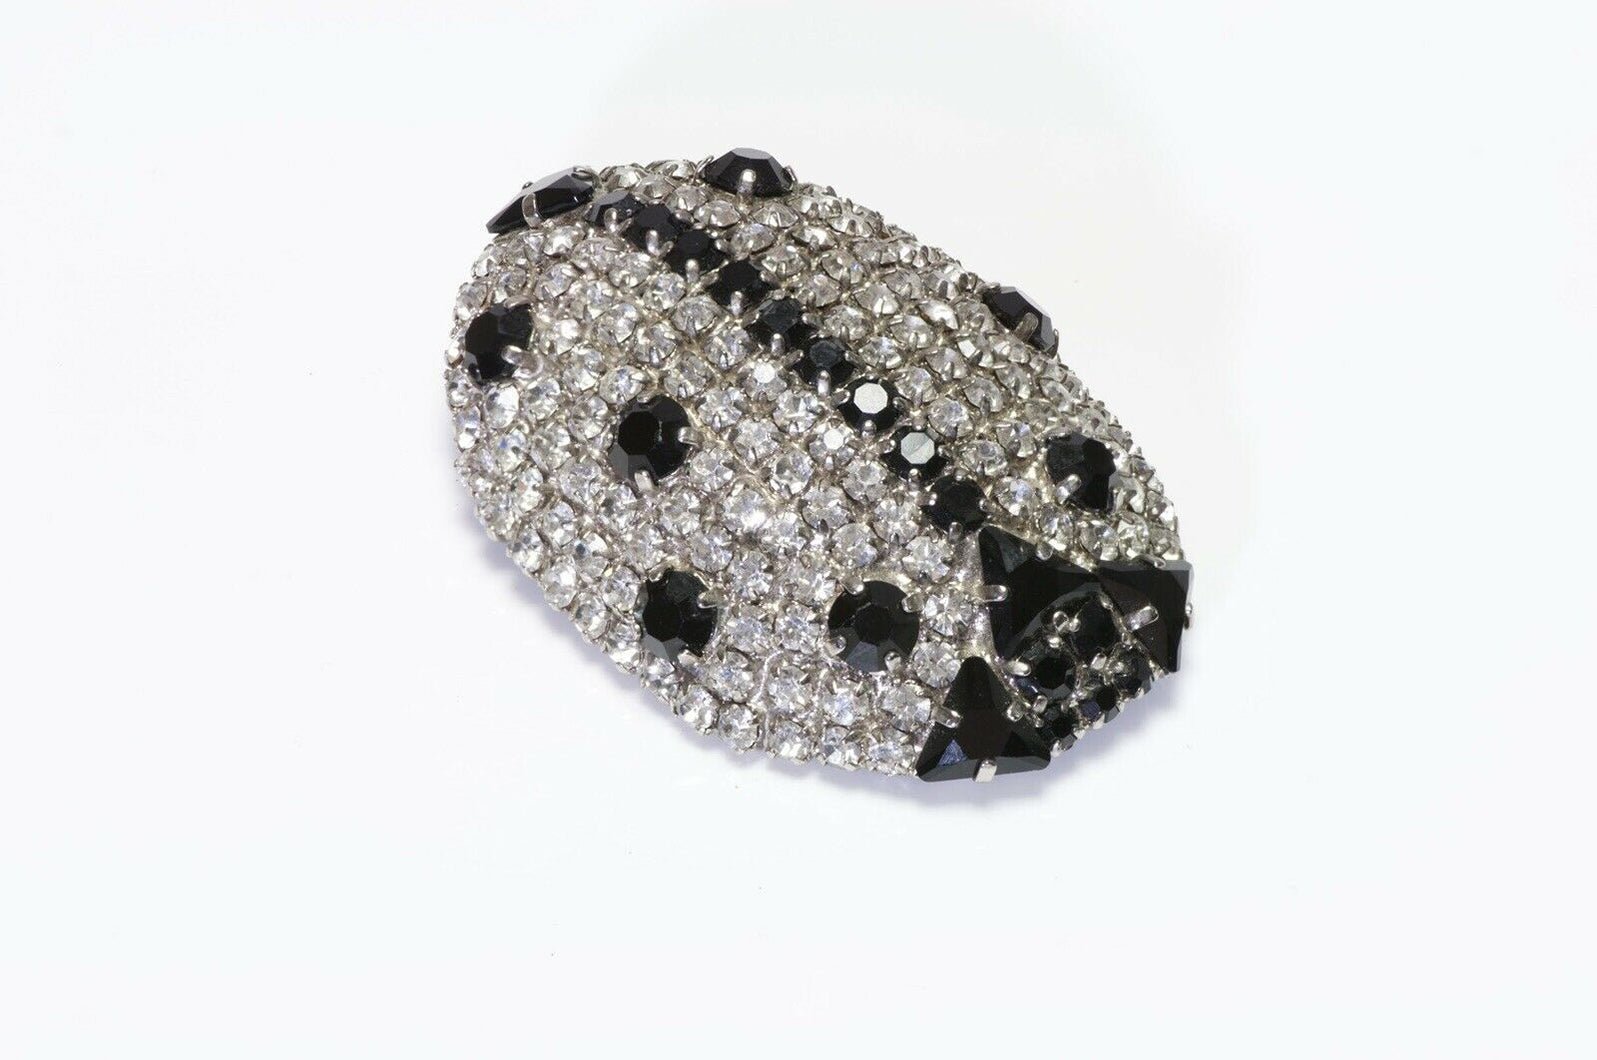 Yves Saint Laurent Rive Gauche Crystal Ladybug Pendant Brooch - DSF Antique Jewelry